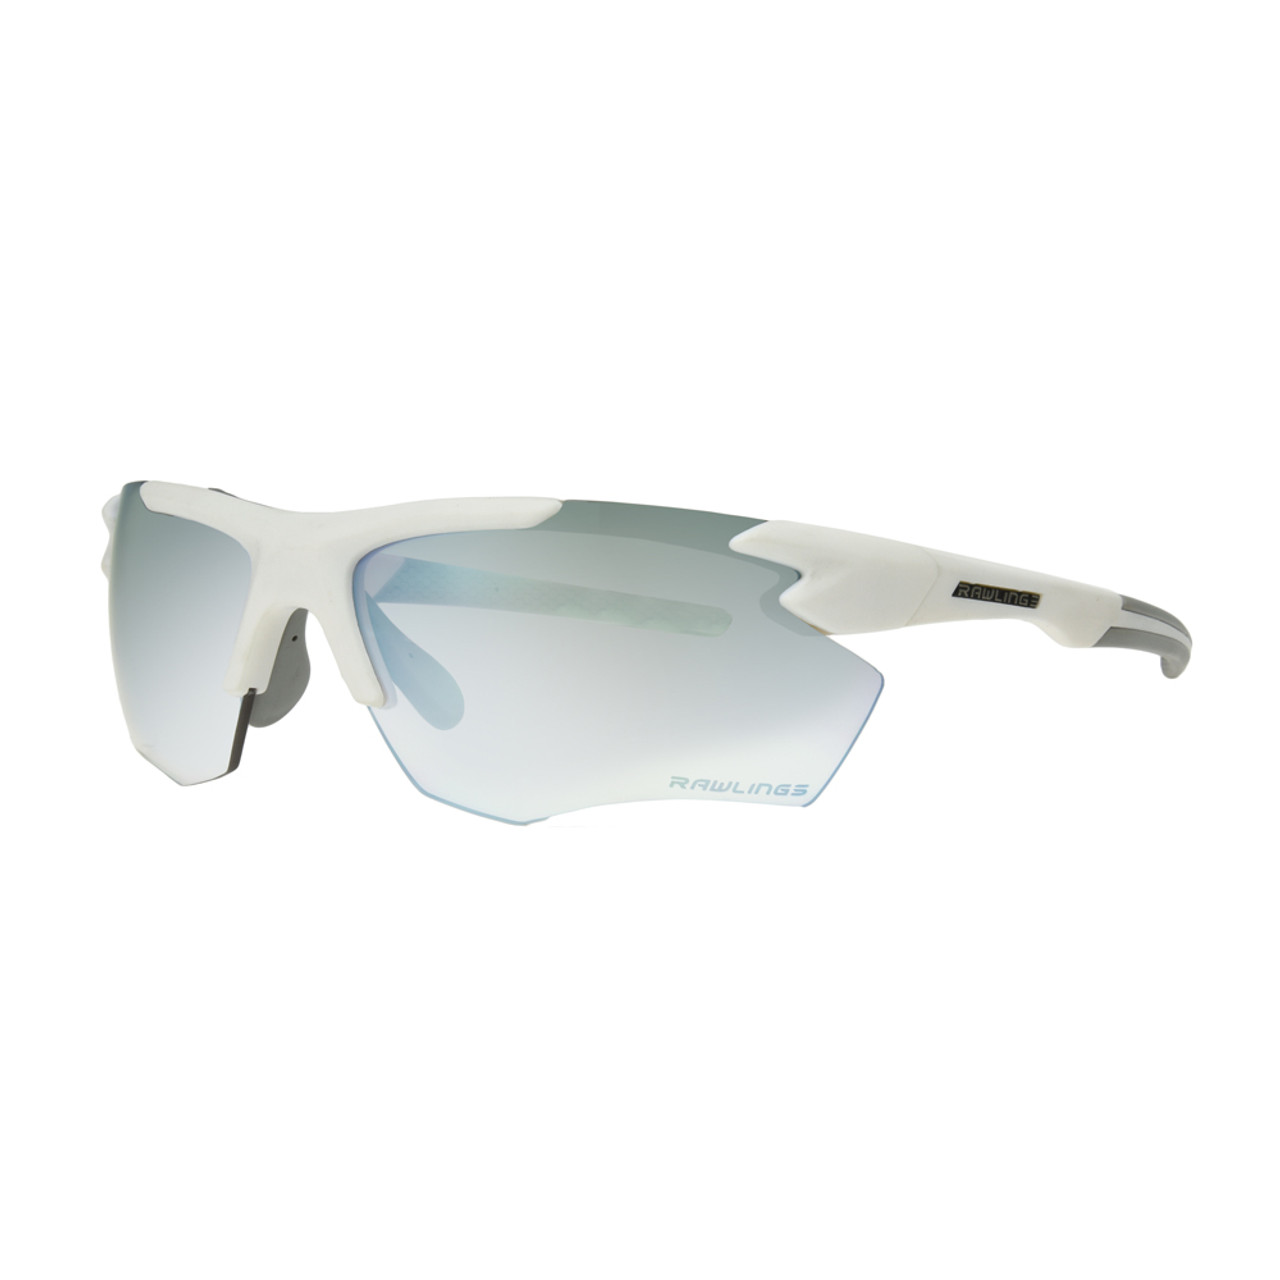 Rawlings 2102 Adult White/Blue Baseball Sunglasses 10257492